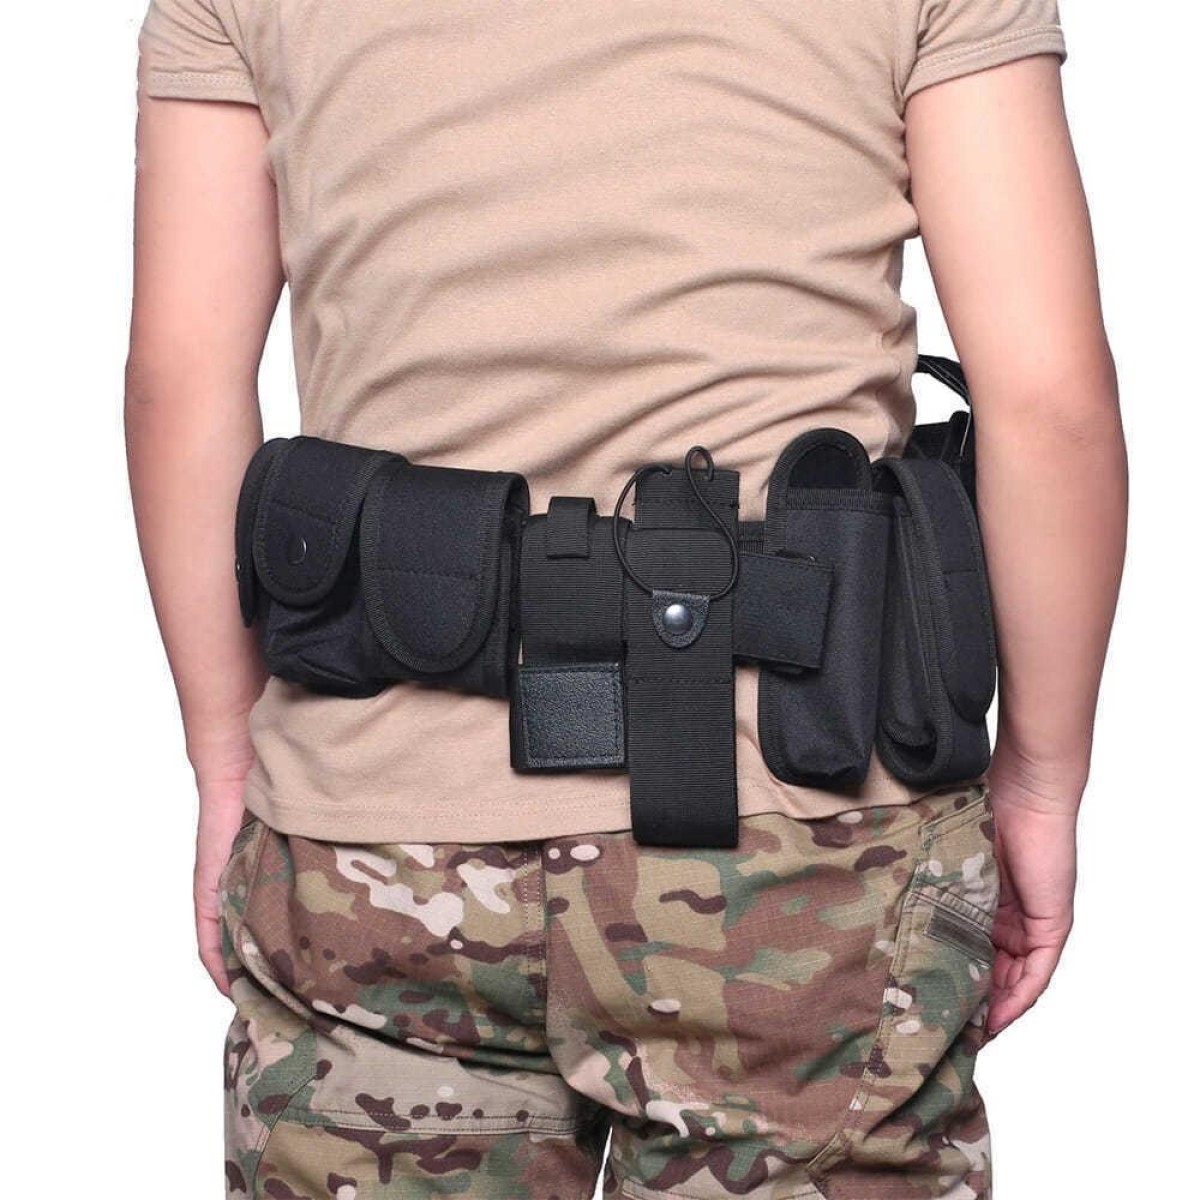 130cm Security Duty Outdoor Multifunctional Waist Pack(Black)